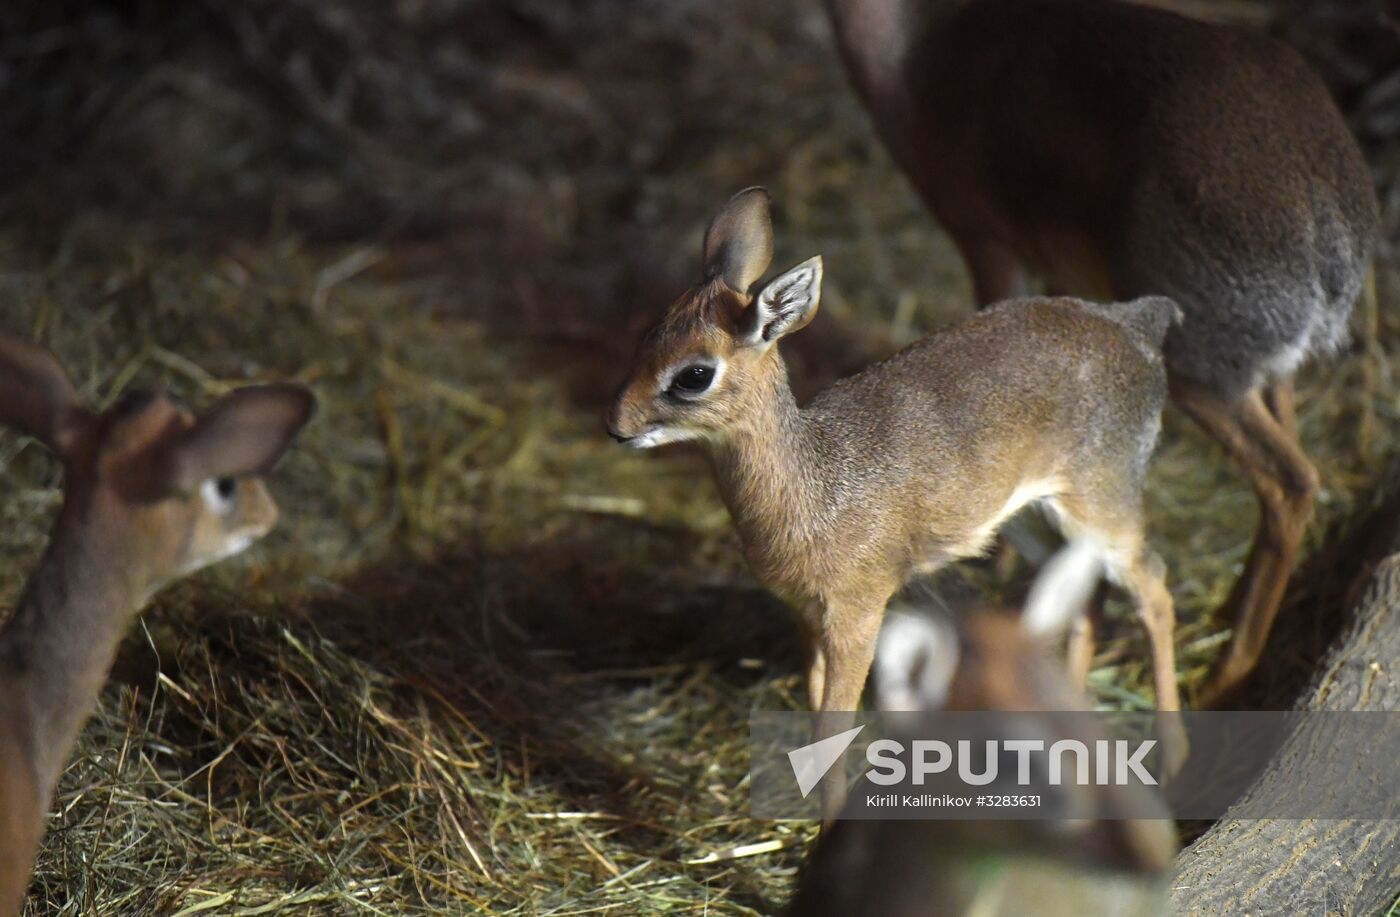 Moscow Baby of dik dik African antelope born at Moscow Zoo